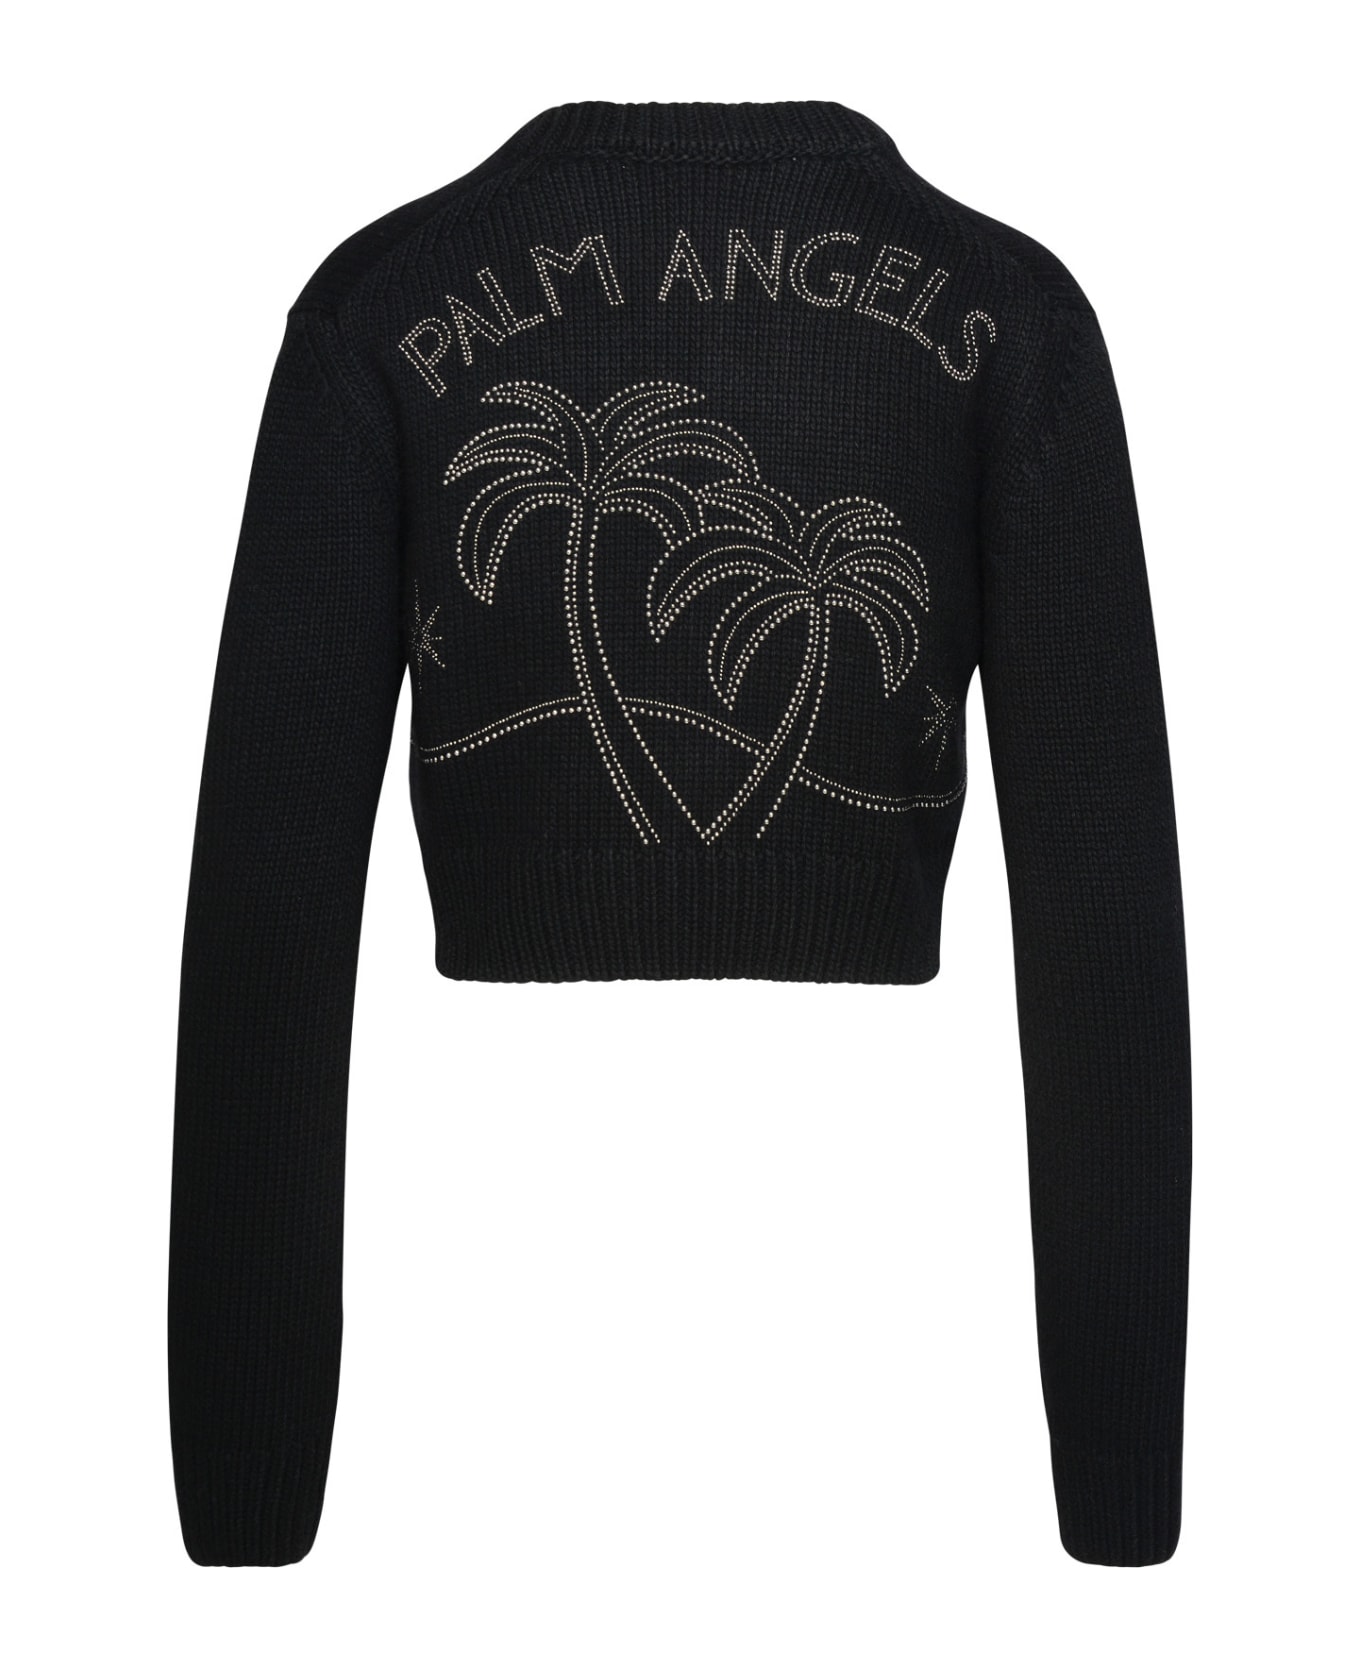 Palm Angels Wool Blend Sweatshirt - Black カーディガン